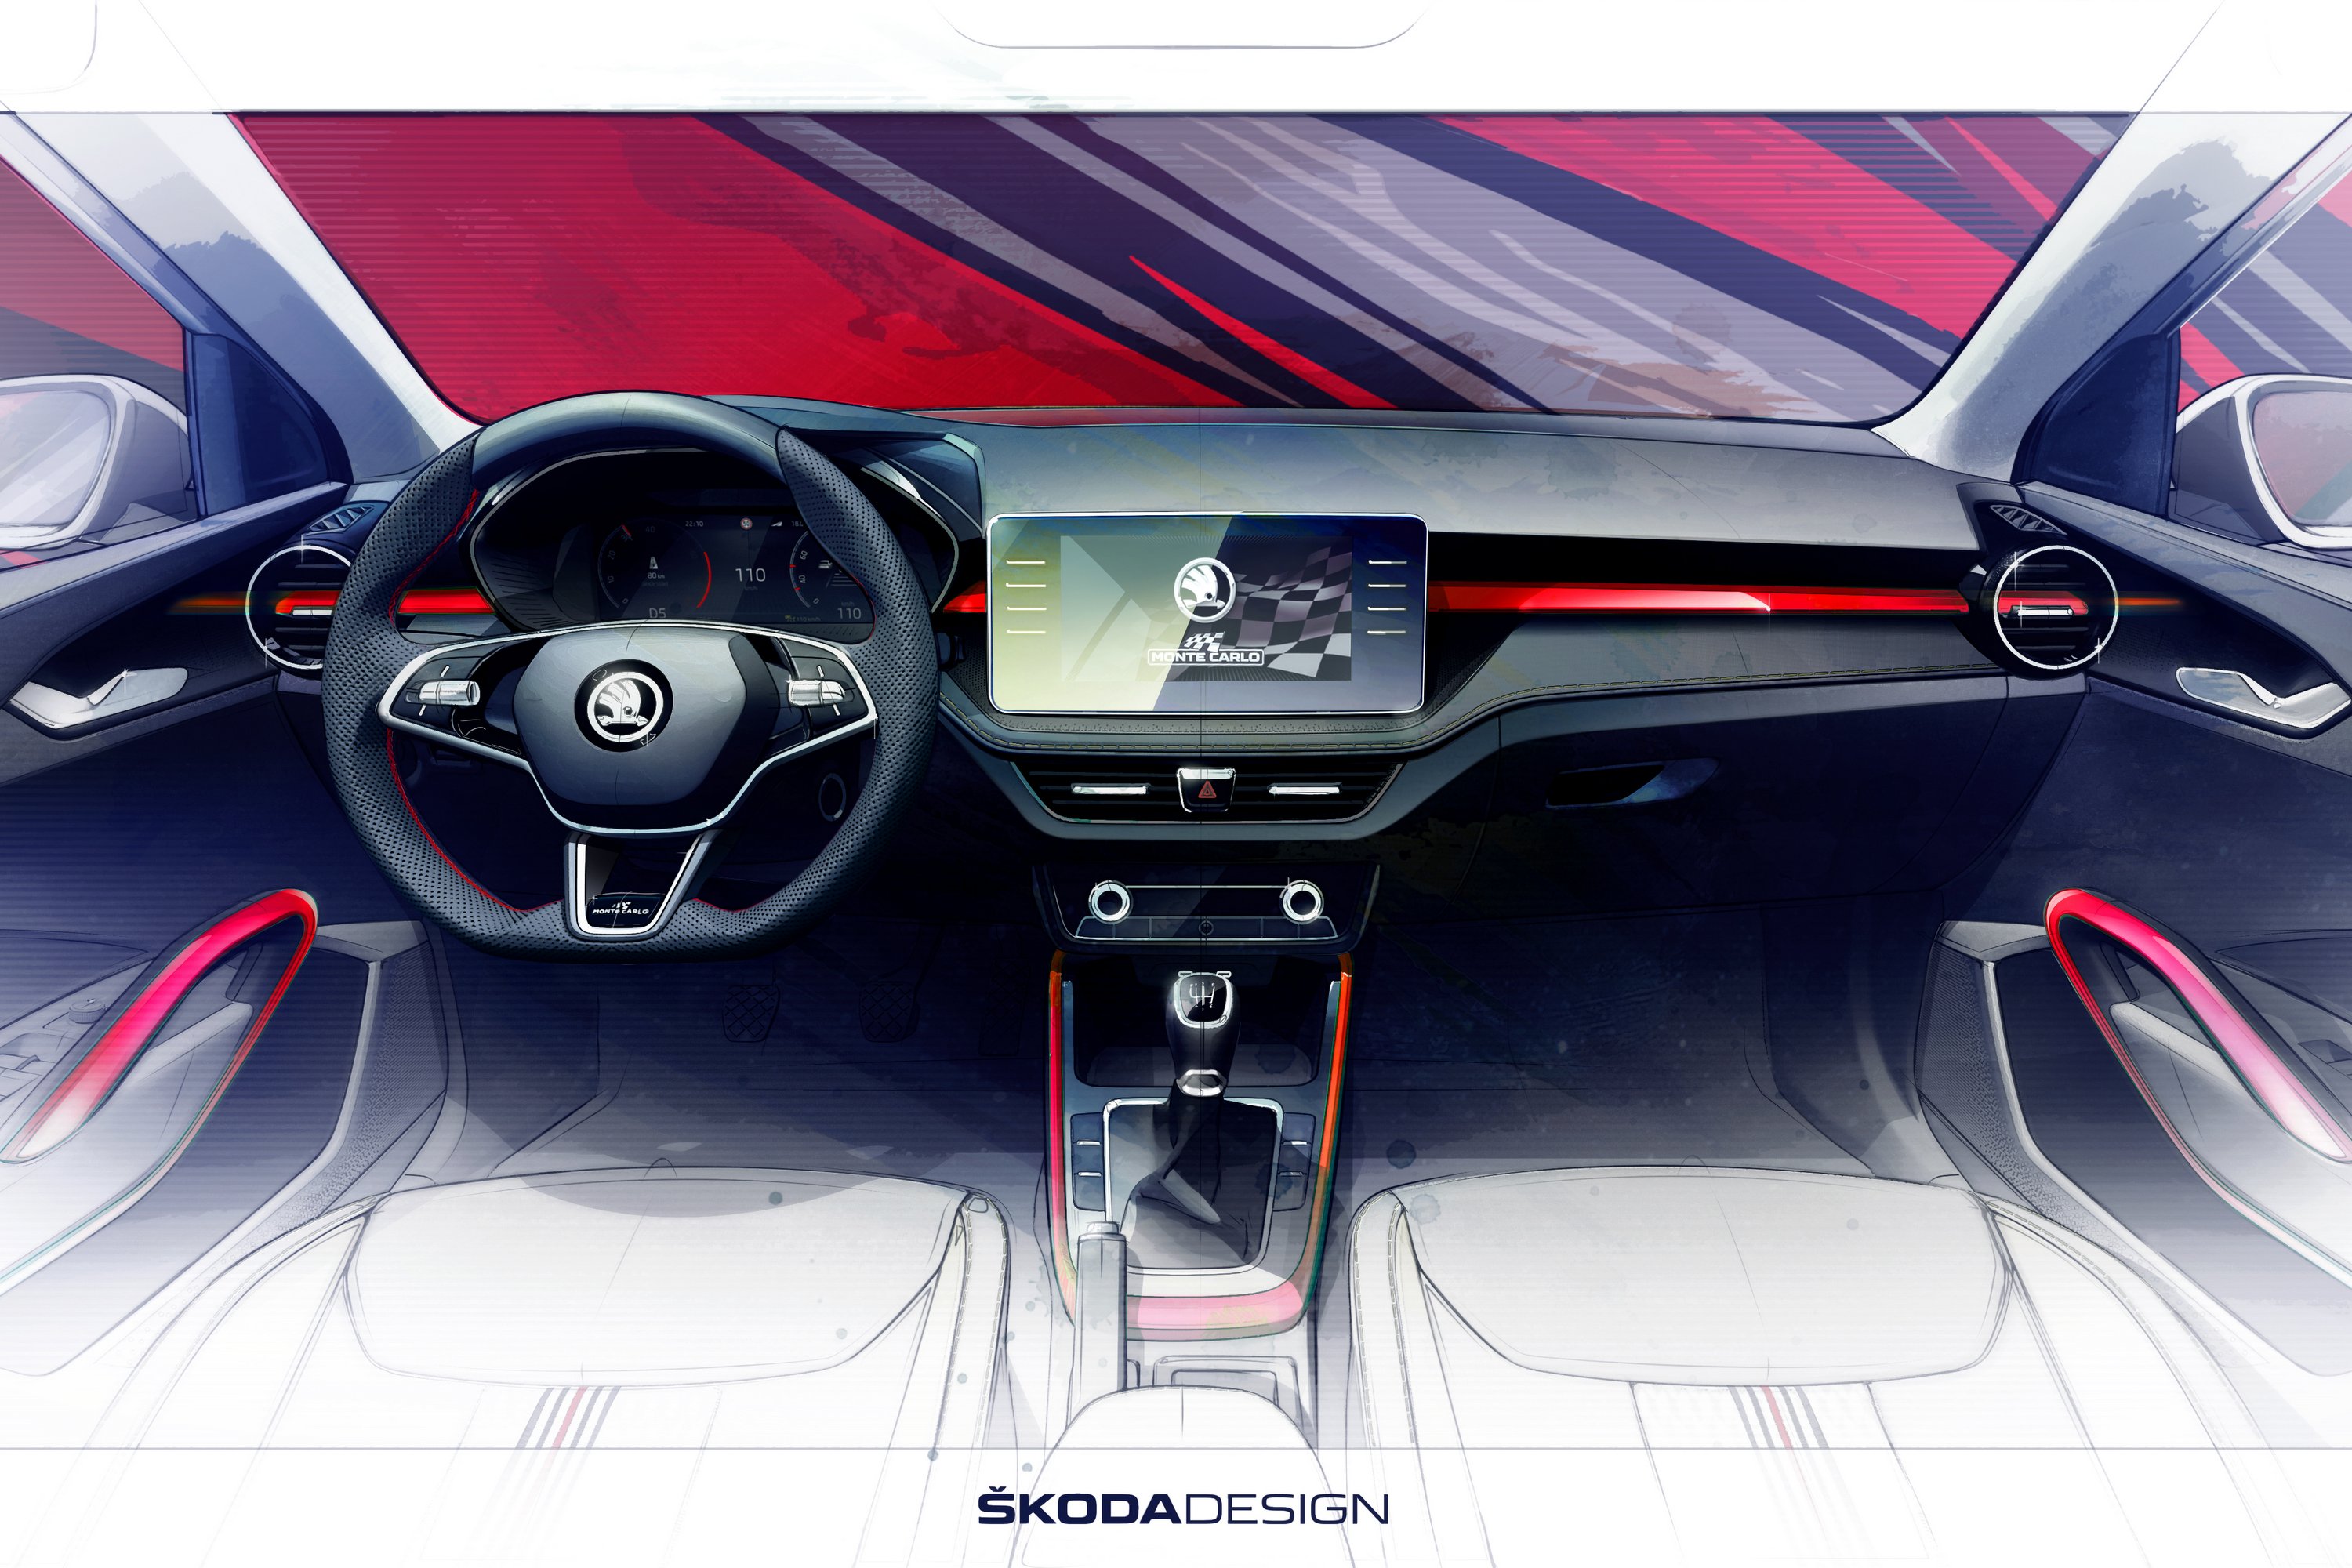 Már készül a Škoda Fabia sportos csúcsverziója  5